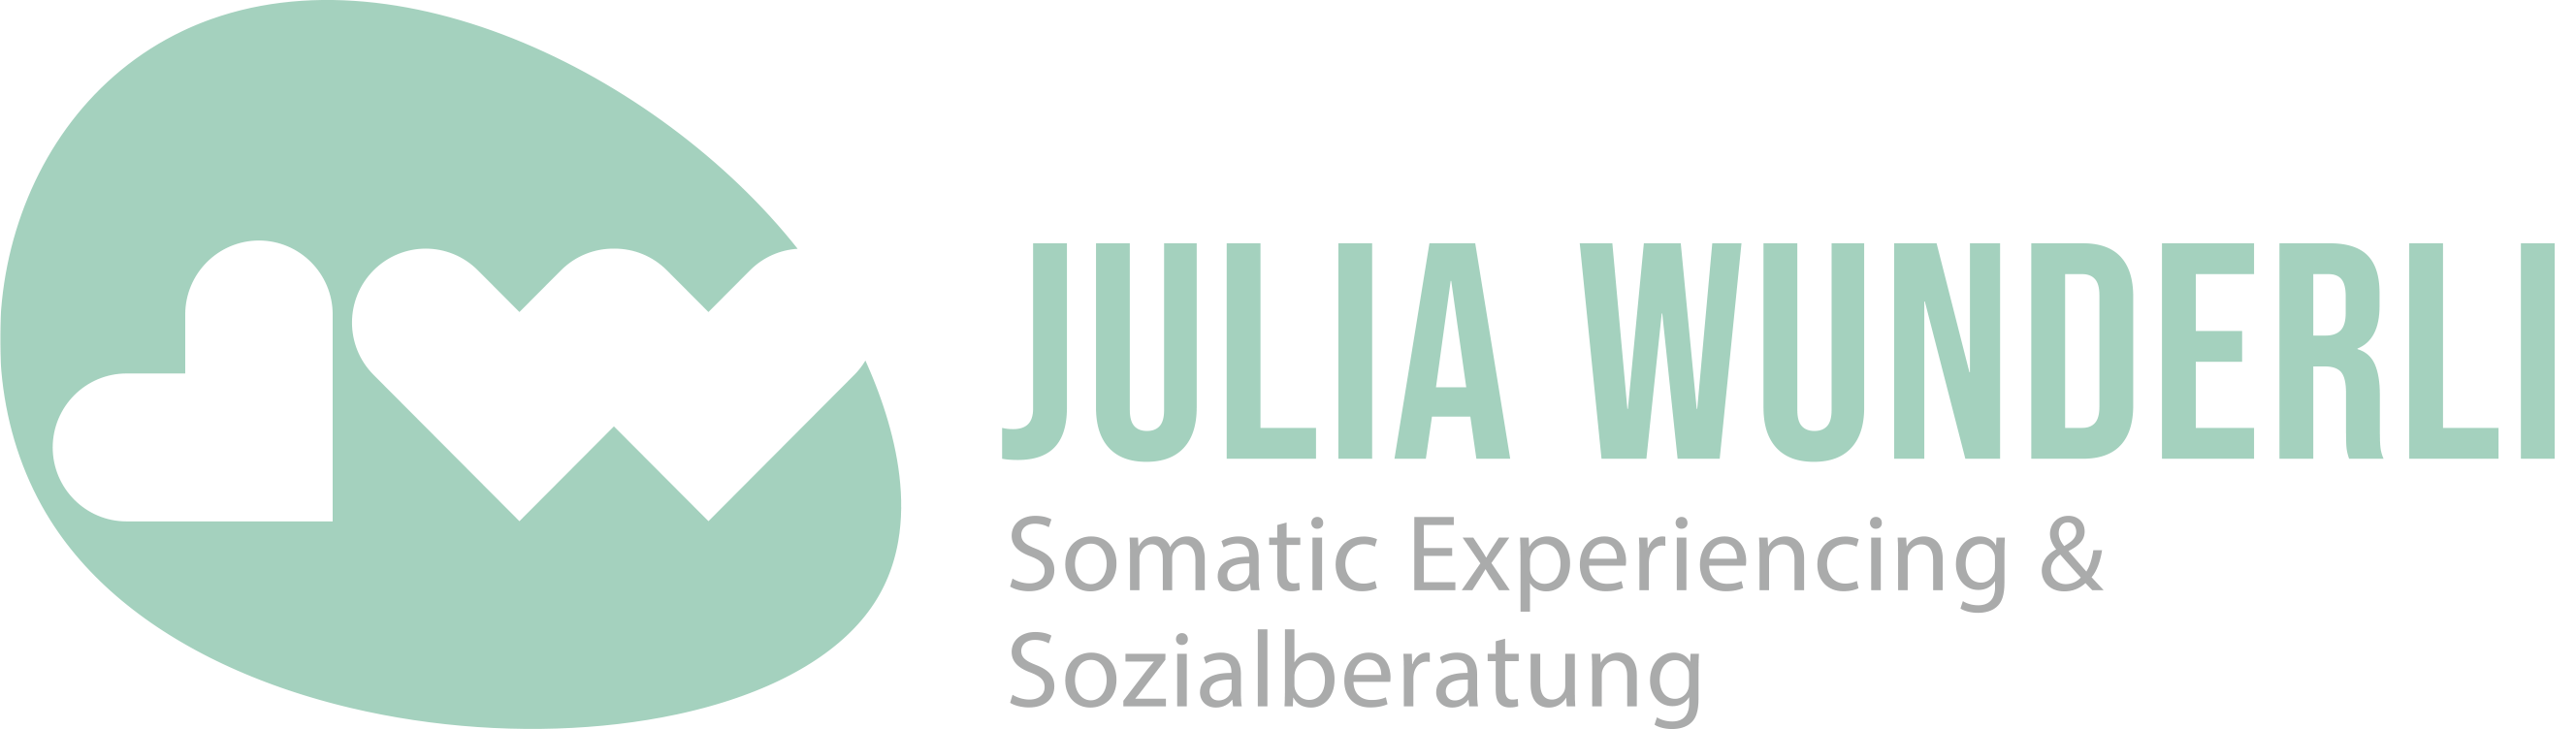 Julia Wunderli